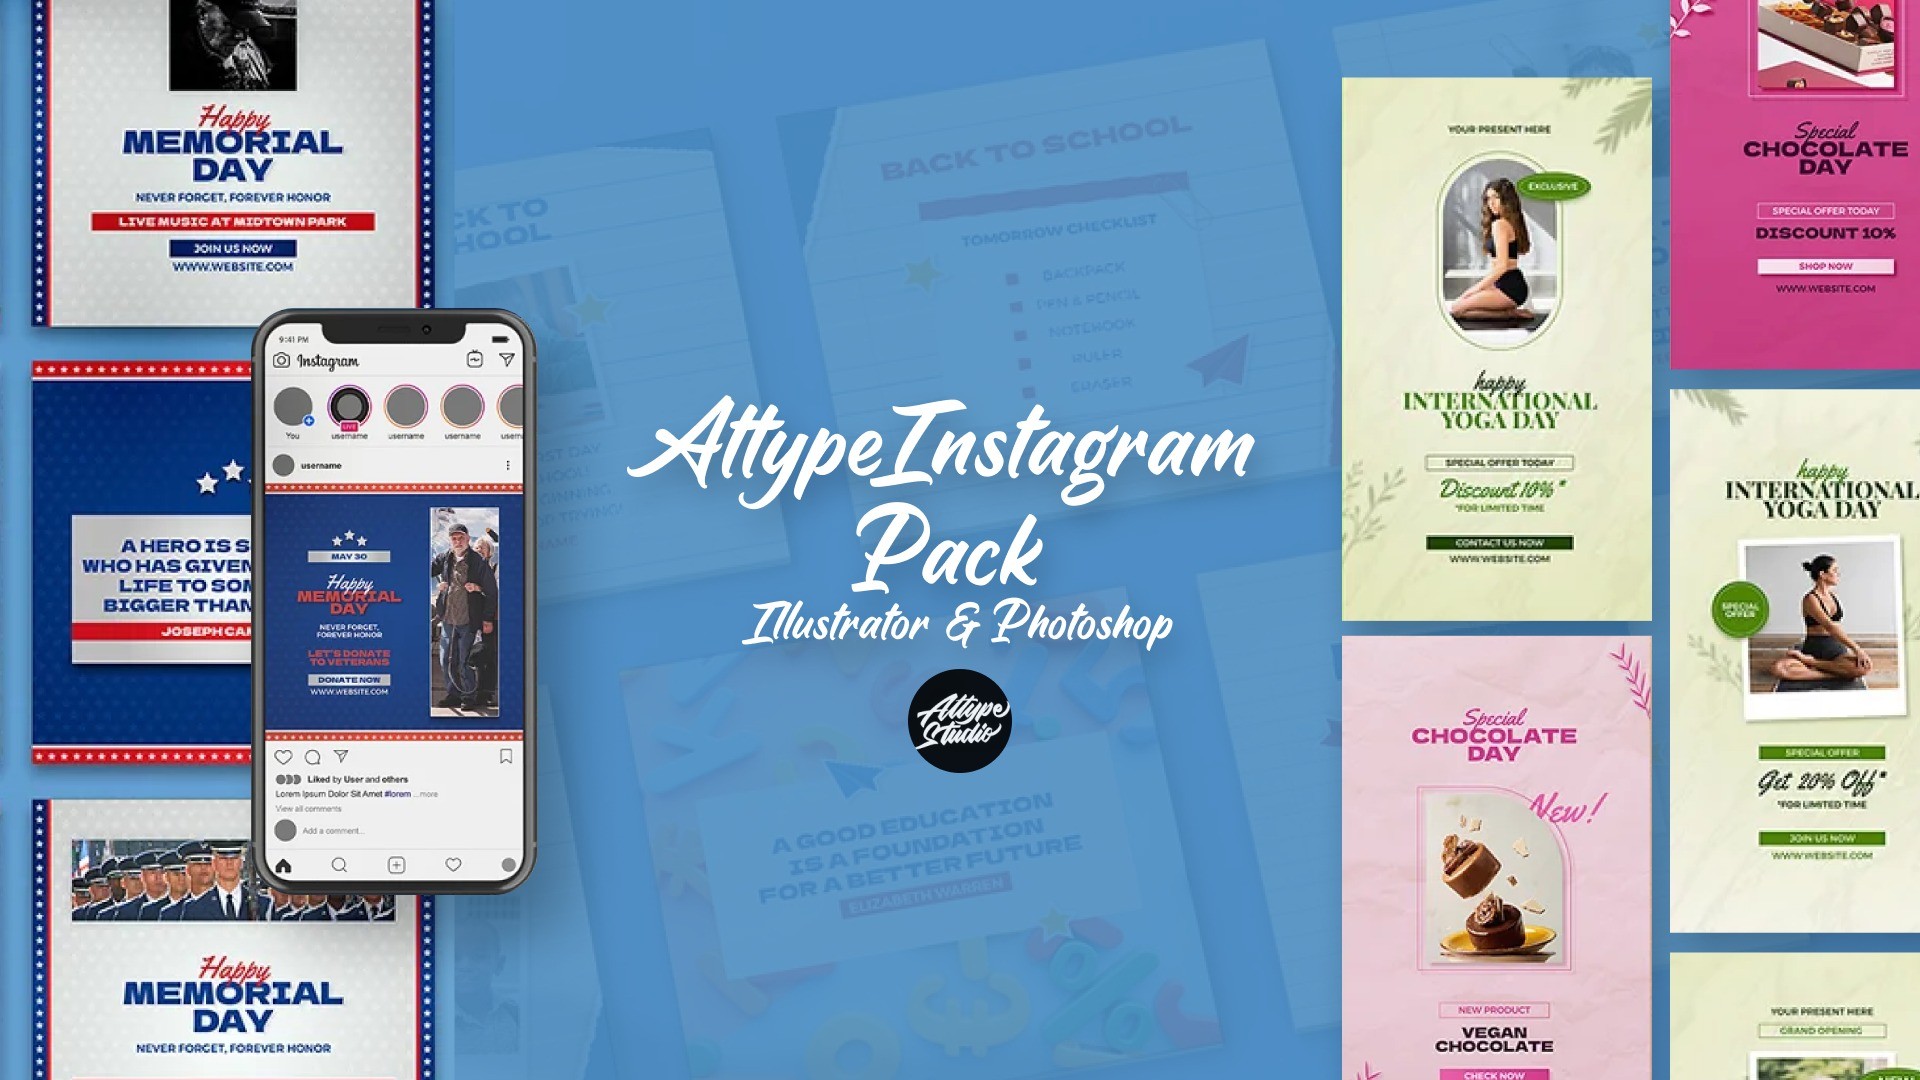 Attype Instagram Pack - Illustrator & Photoshop